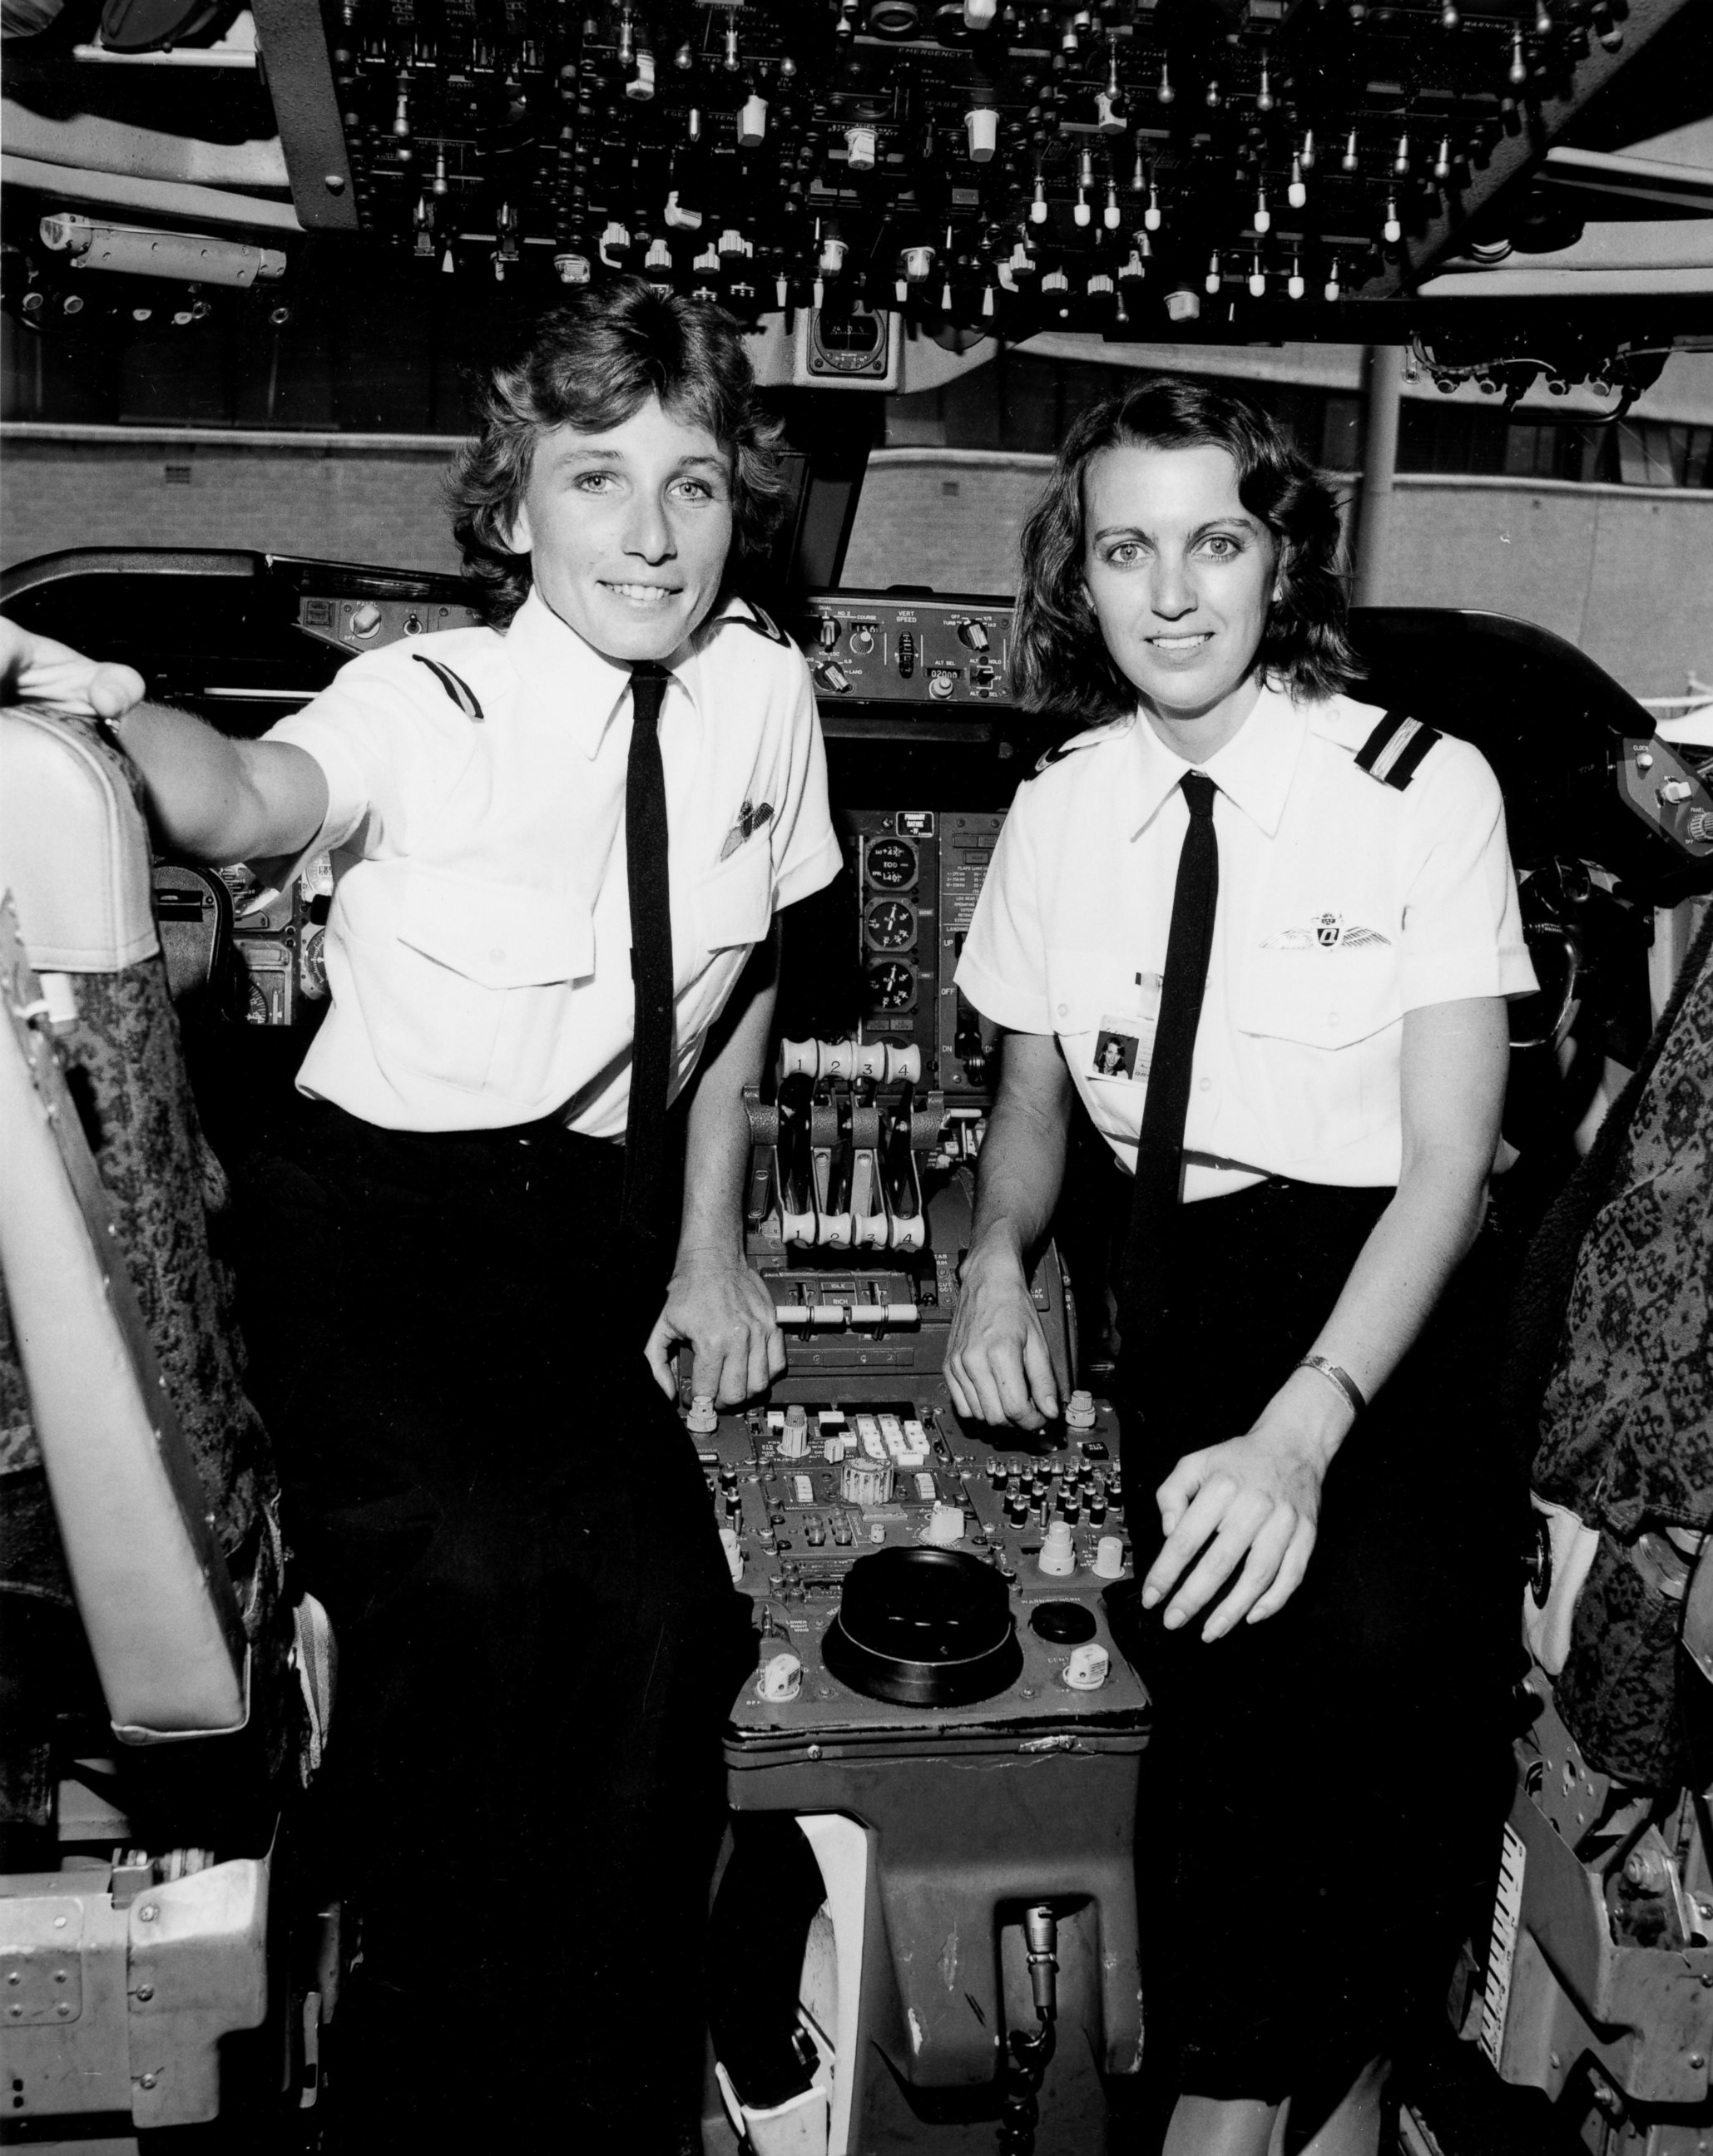 PHOTO: The pilots uniforms for Qantas Airlines, 1980s. 